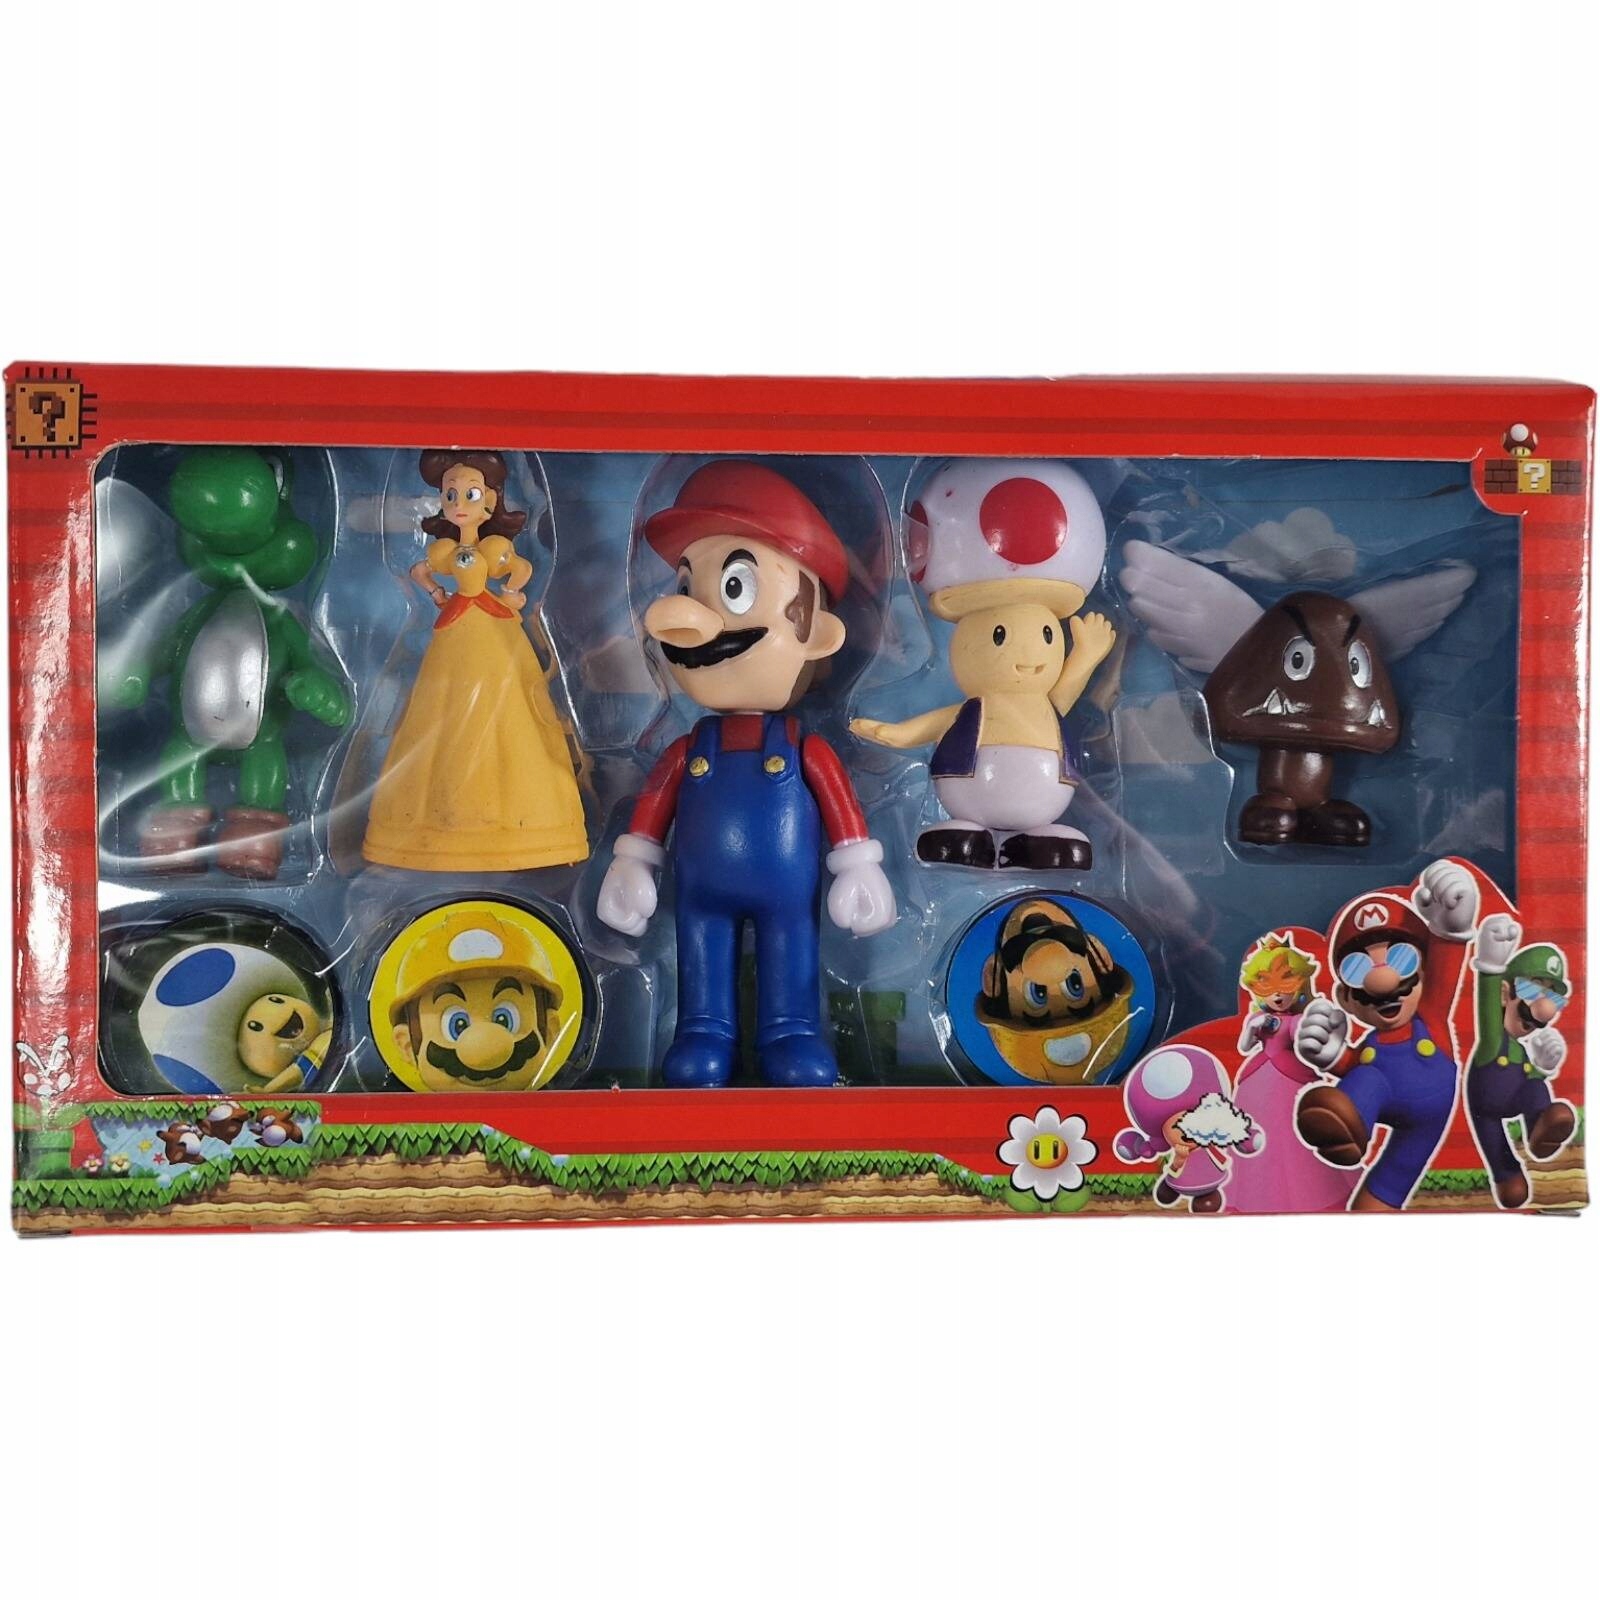 jusqu'à 3% Figurine Super Mario de Nintendo